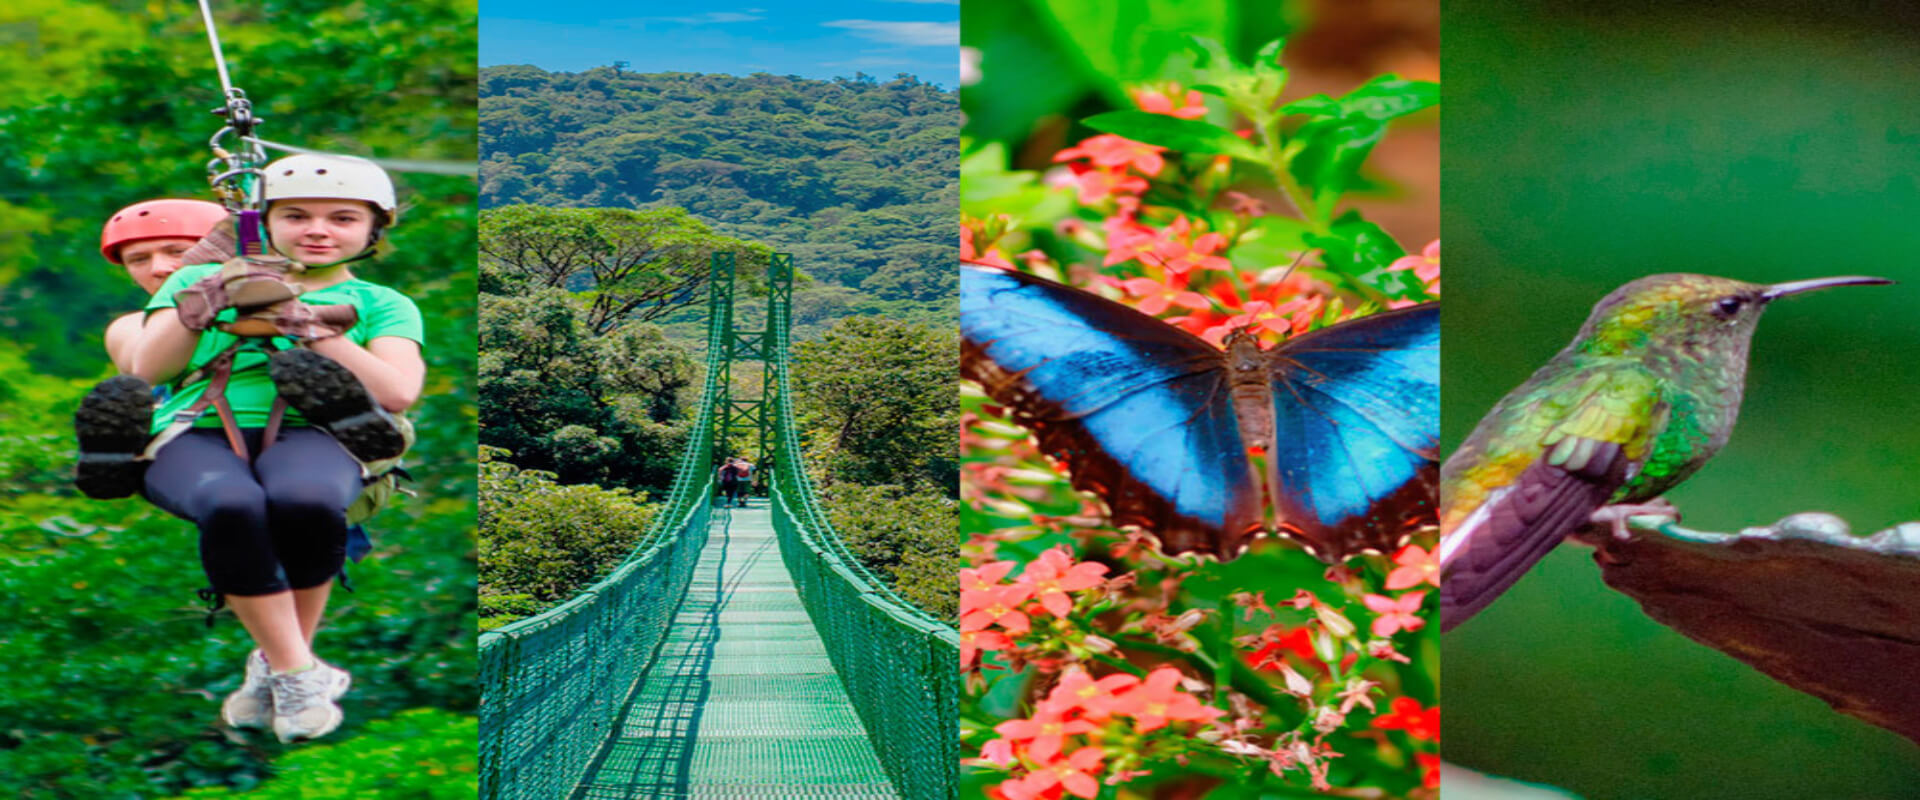 Selvatura Canopy Tour | Costa Rica Jade Tours